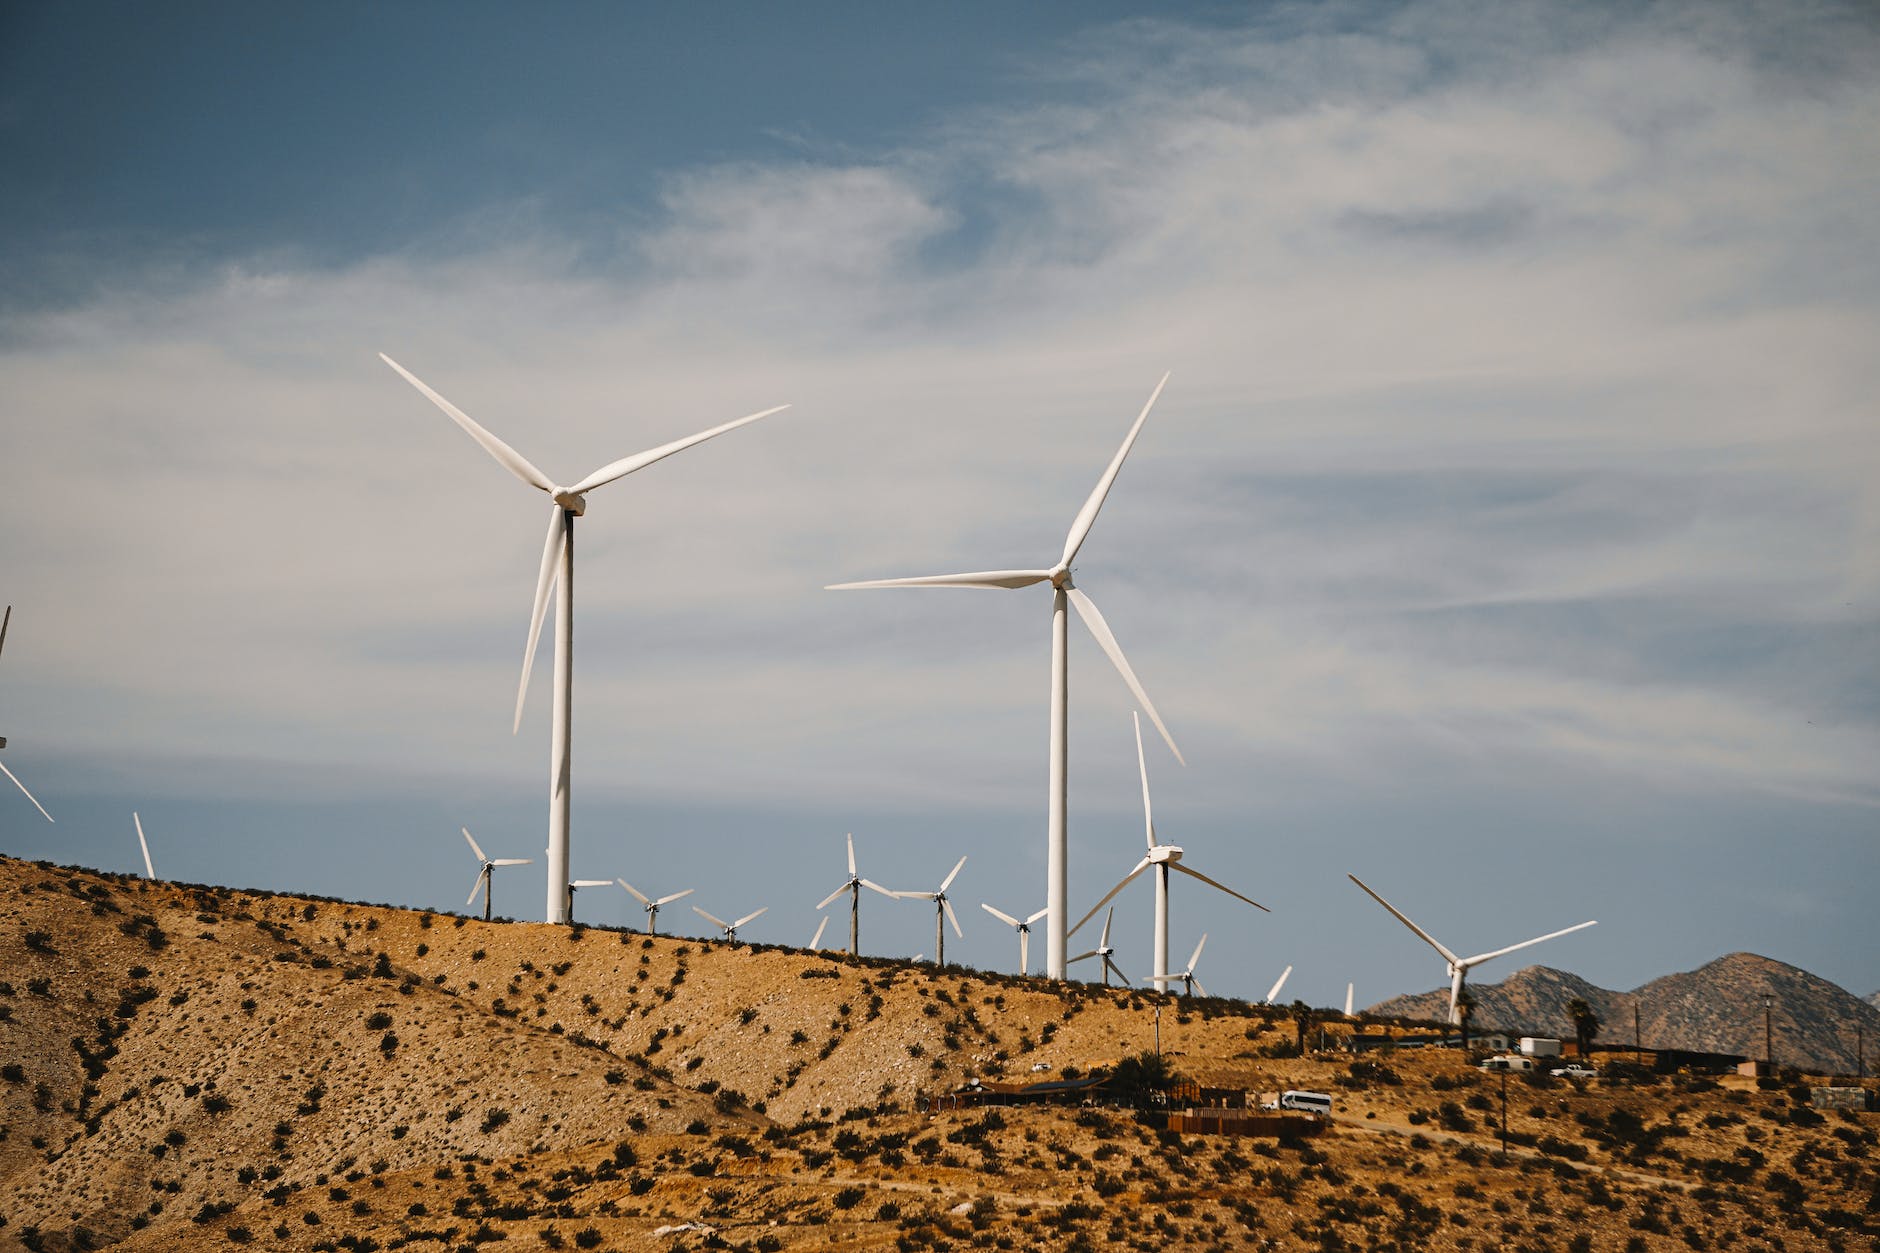 a wind farm in the desert